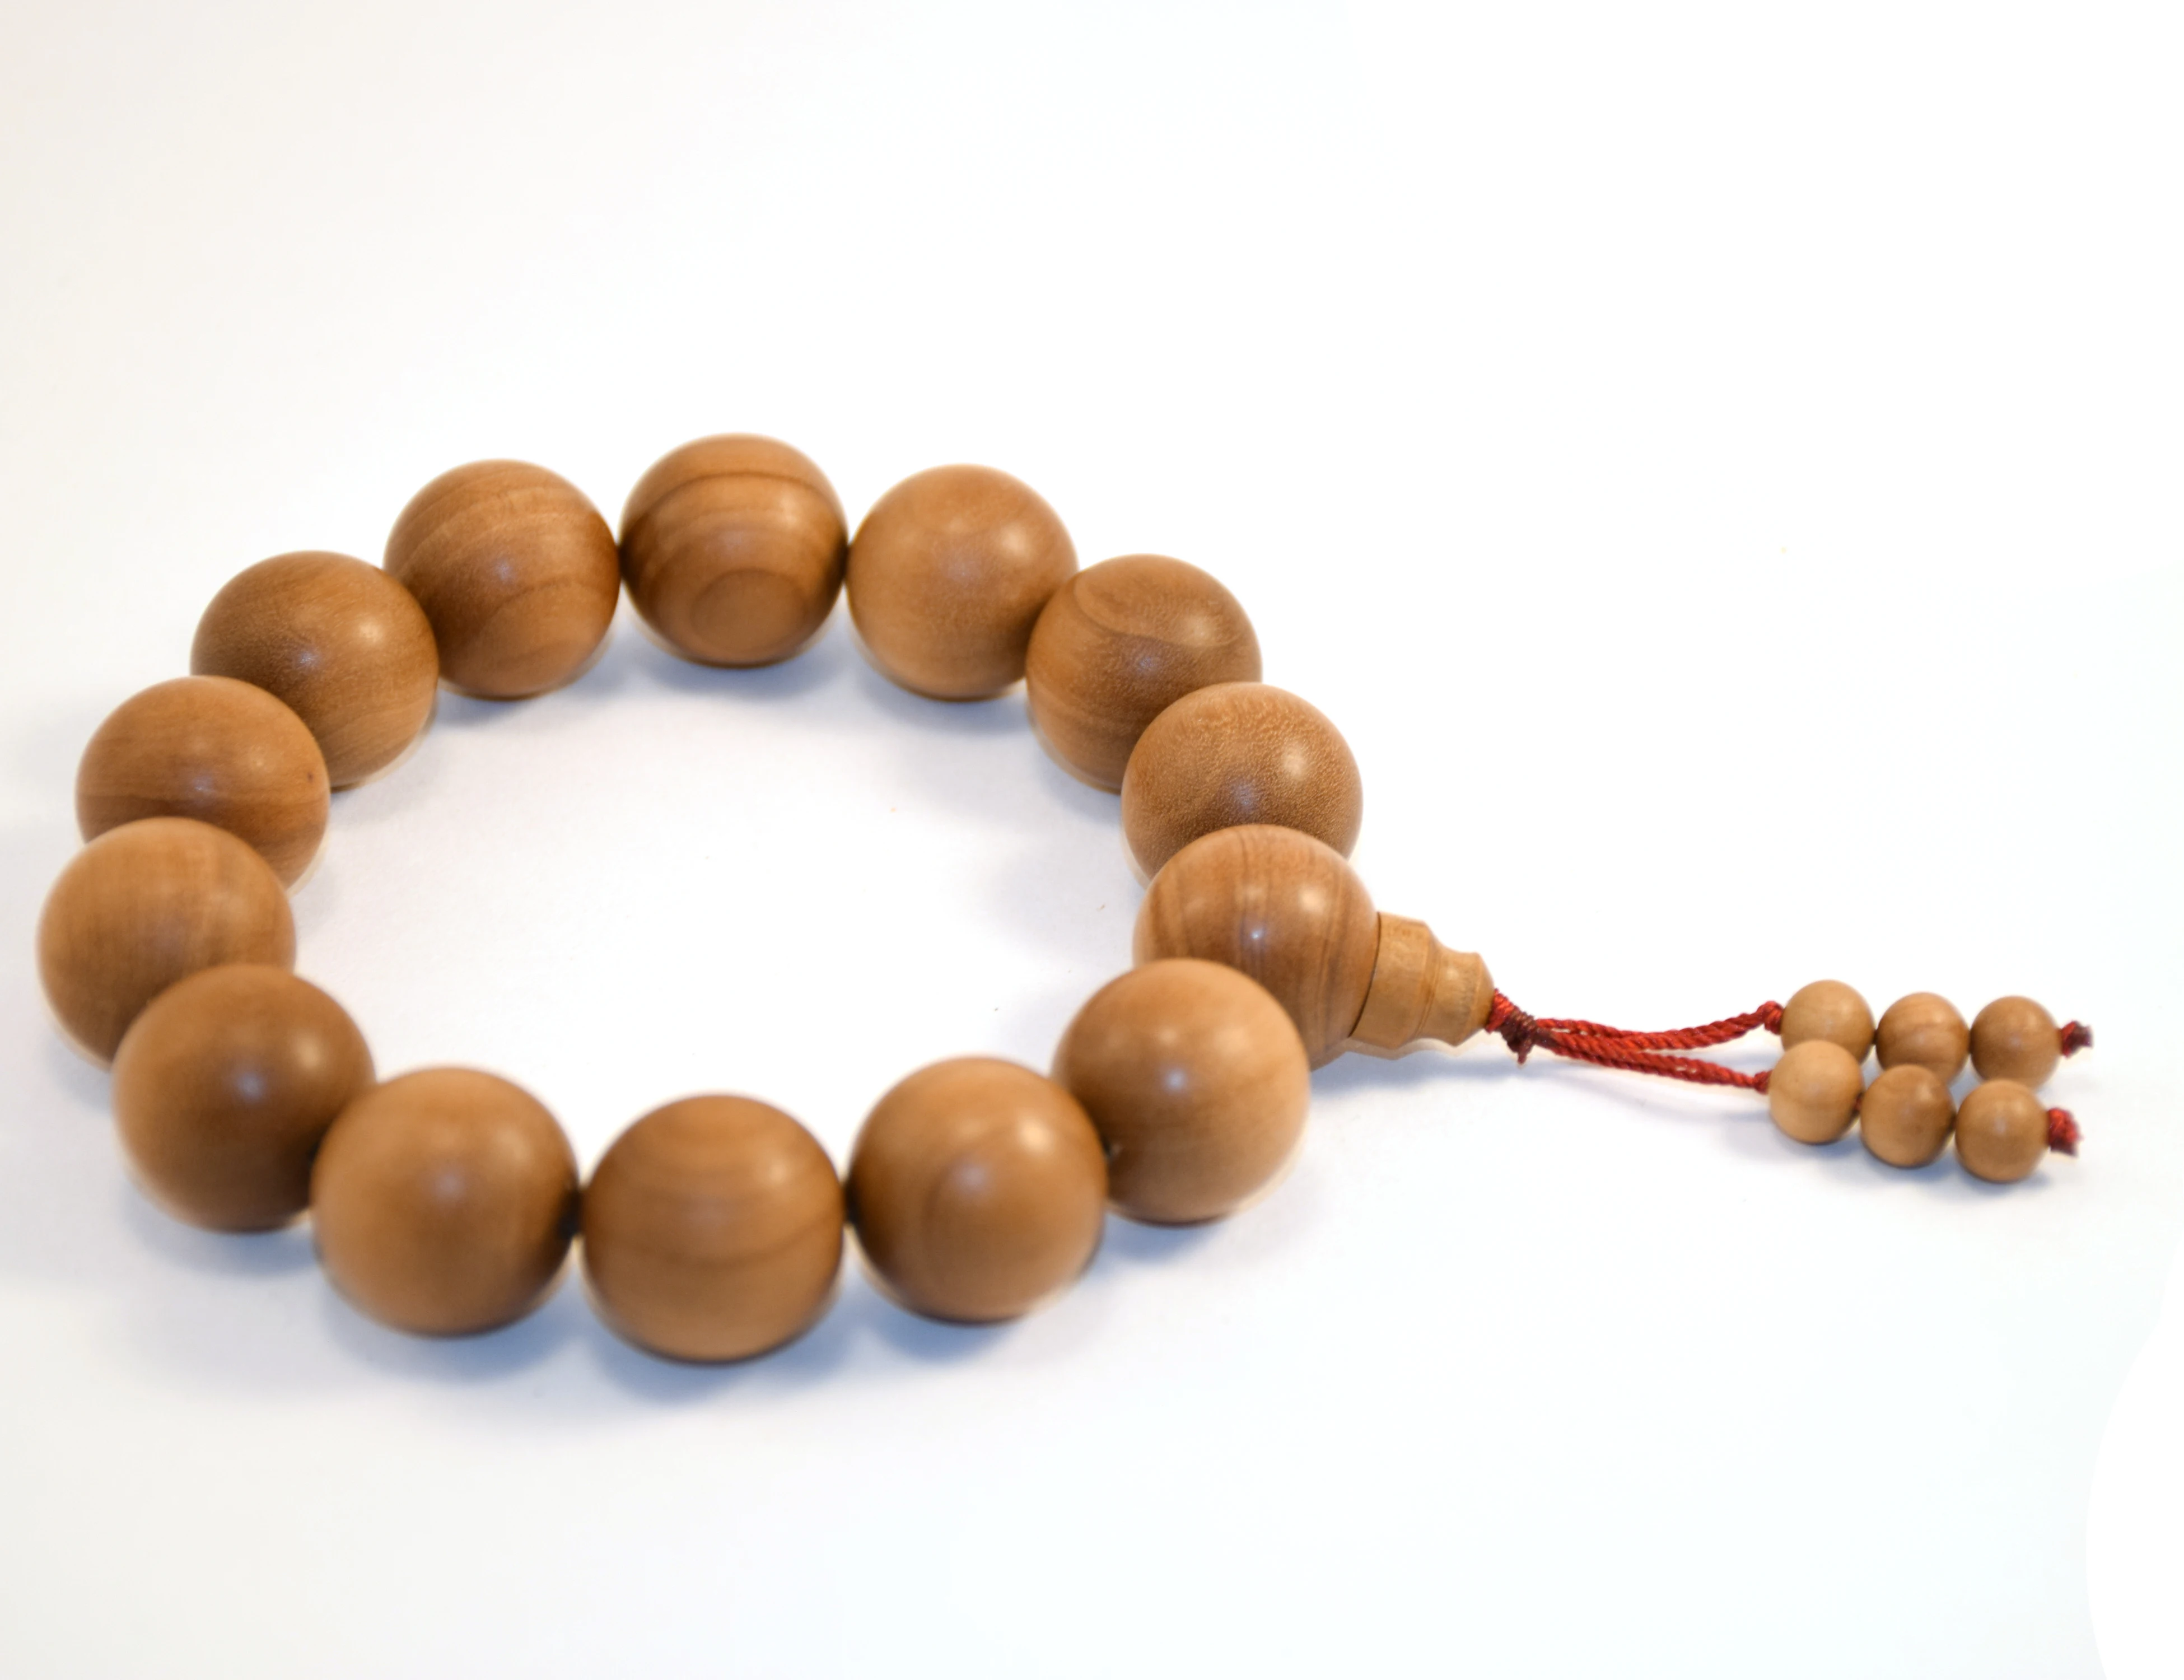 buddhist prayer beads bracelet